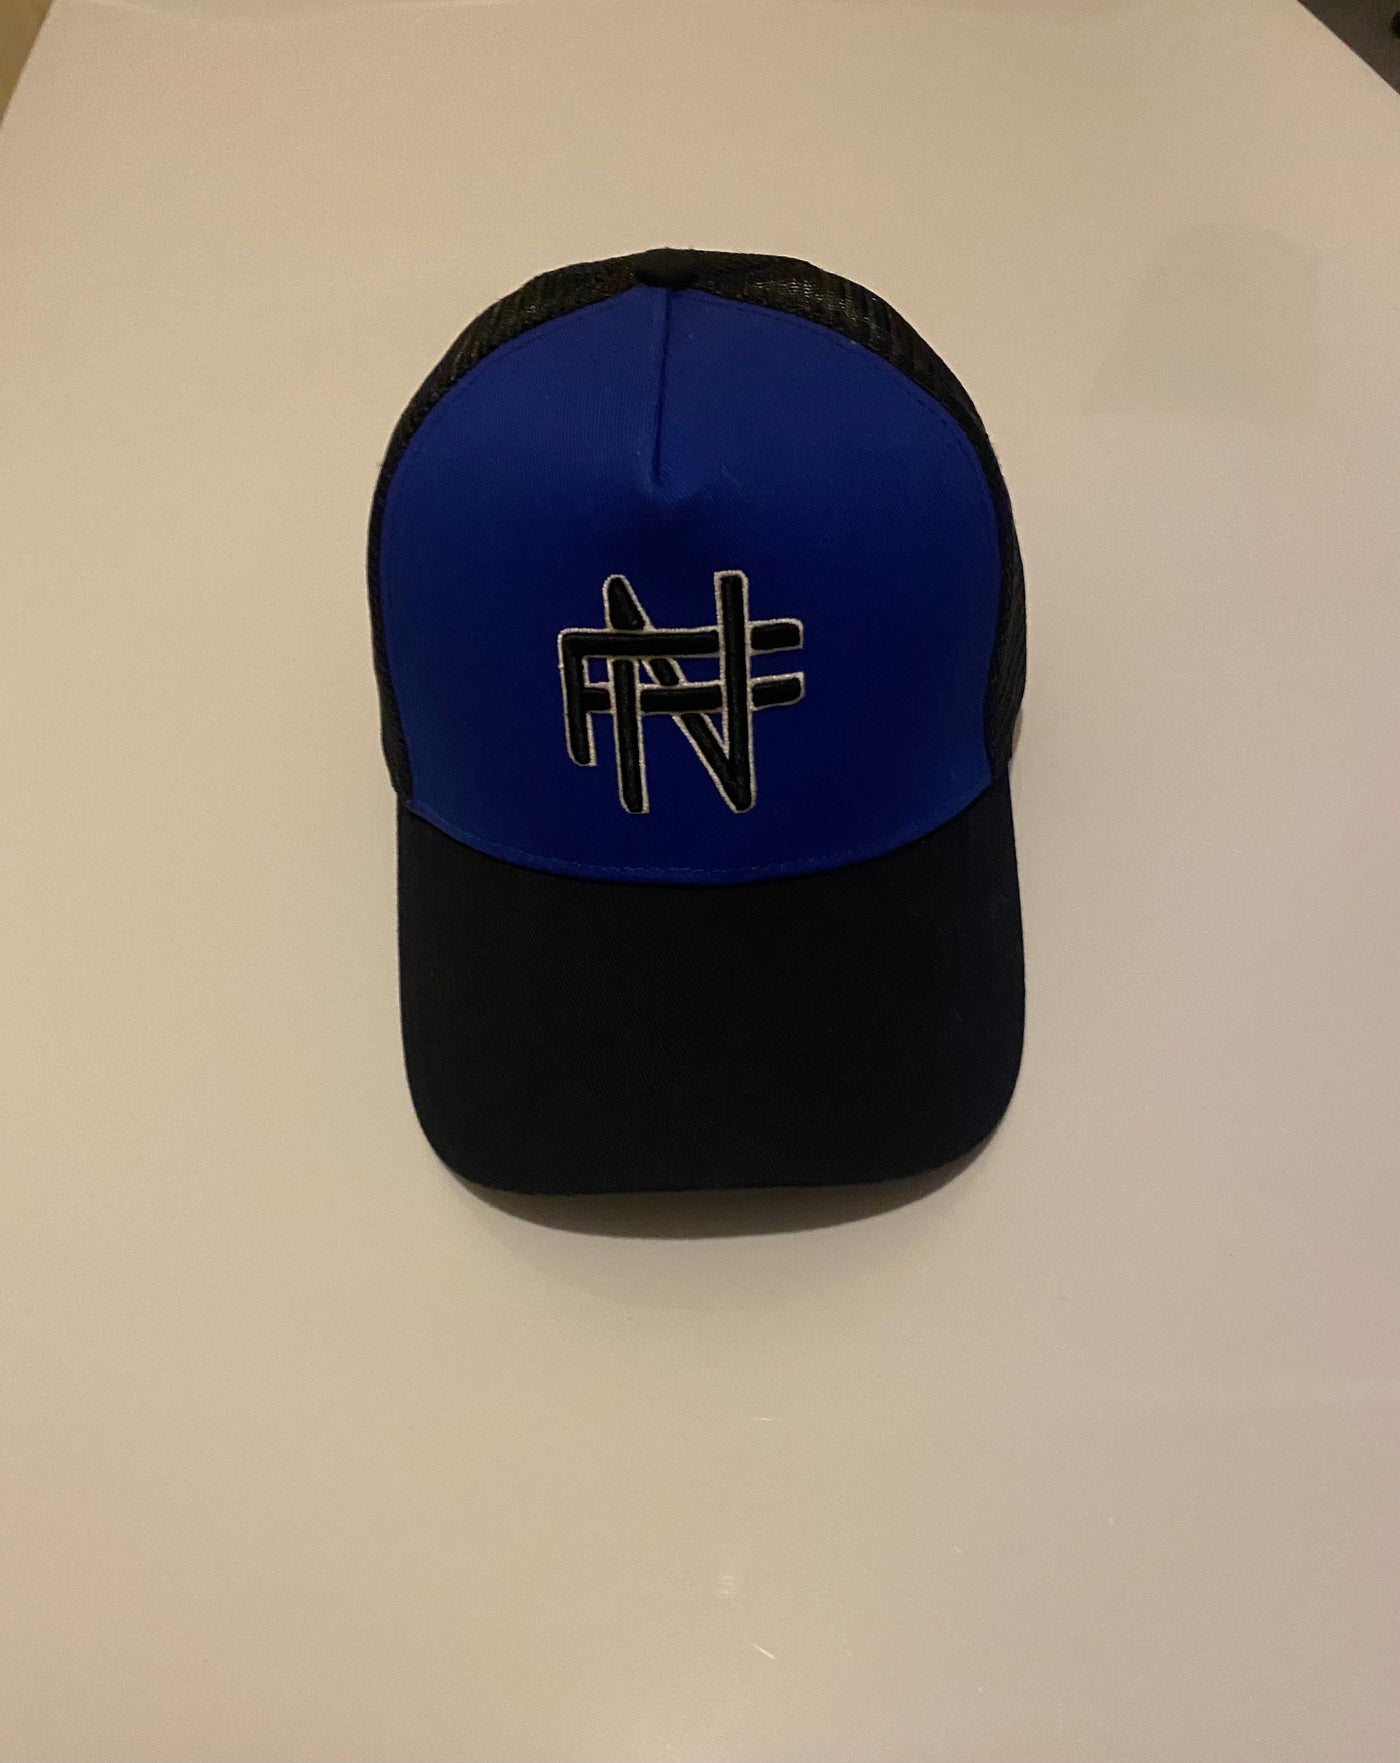 FN CAP BLUE & BLACK | FN Cap Blue & Black | Cool and Trendy Baseball Cap | FULANI